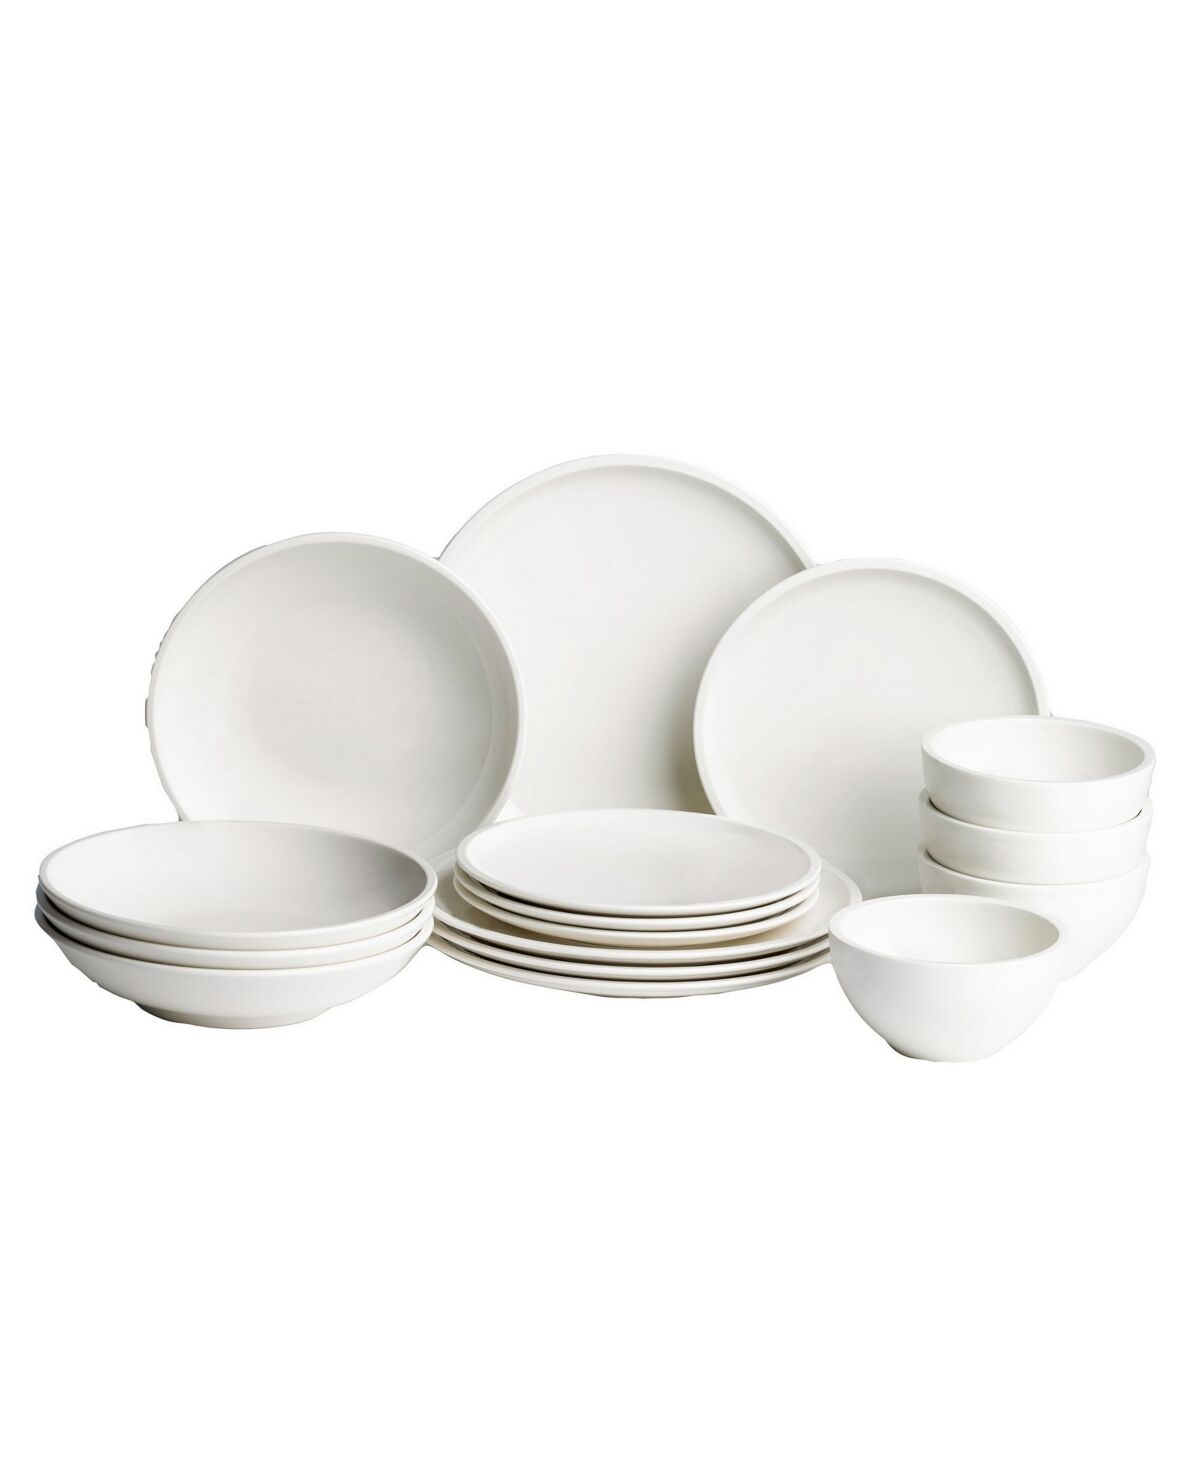 Villeroy & Boch Artesano 16 Piece Dinnerware Set, Service For 4 - White